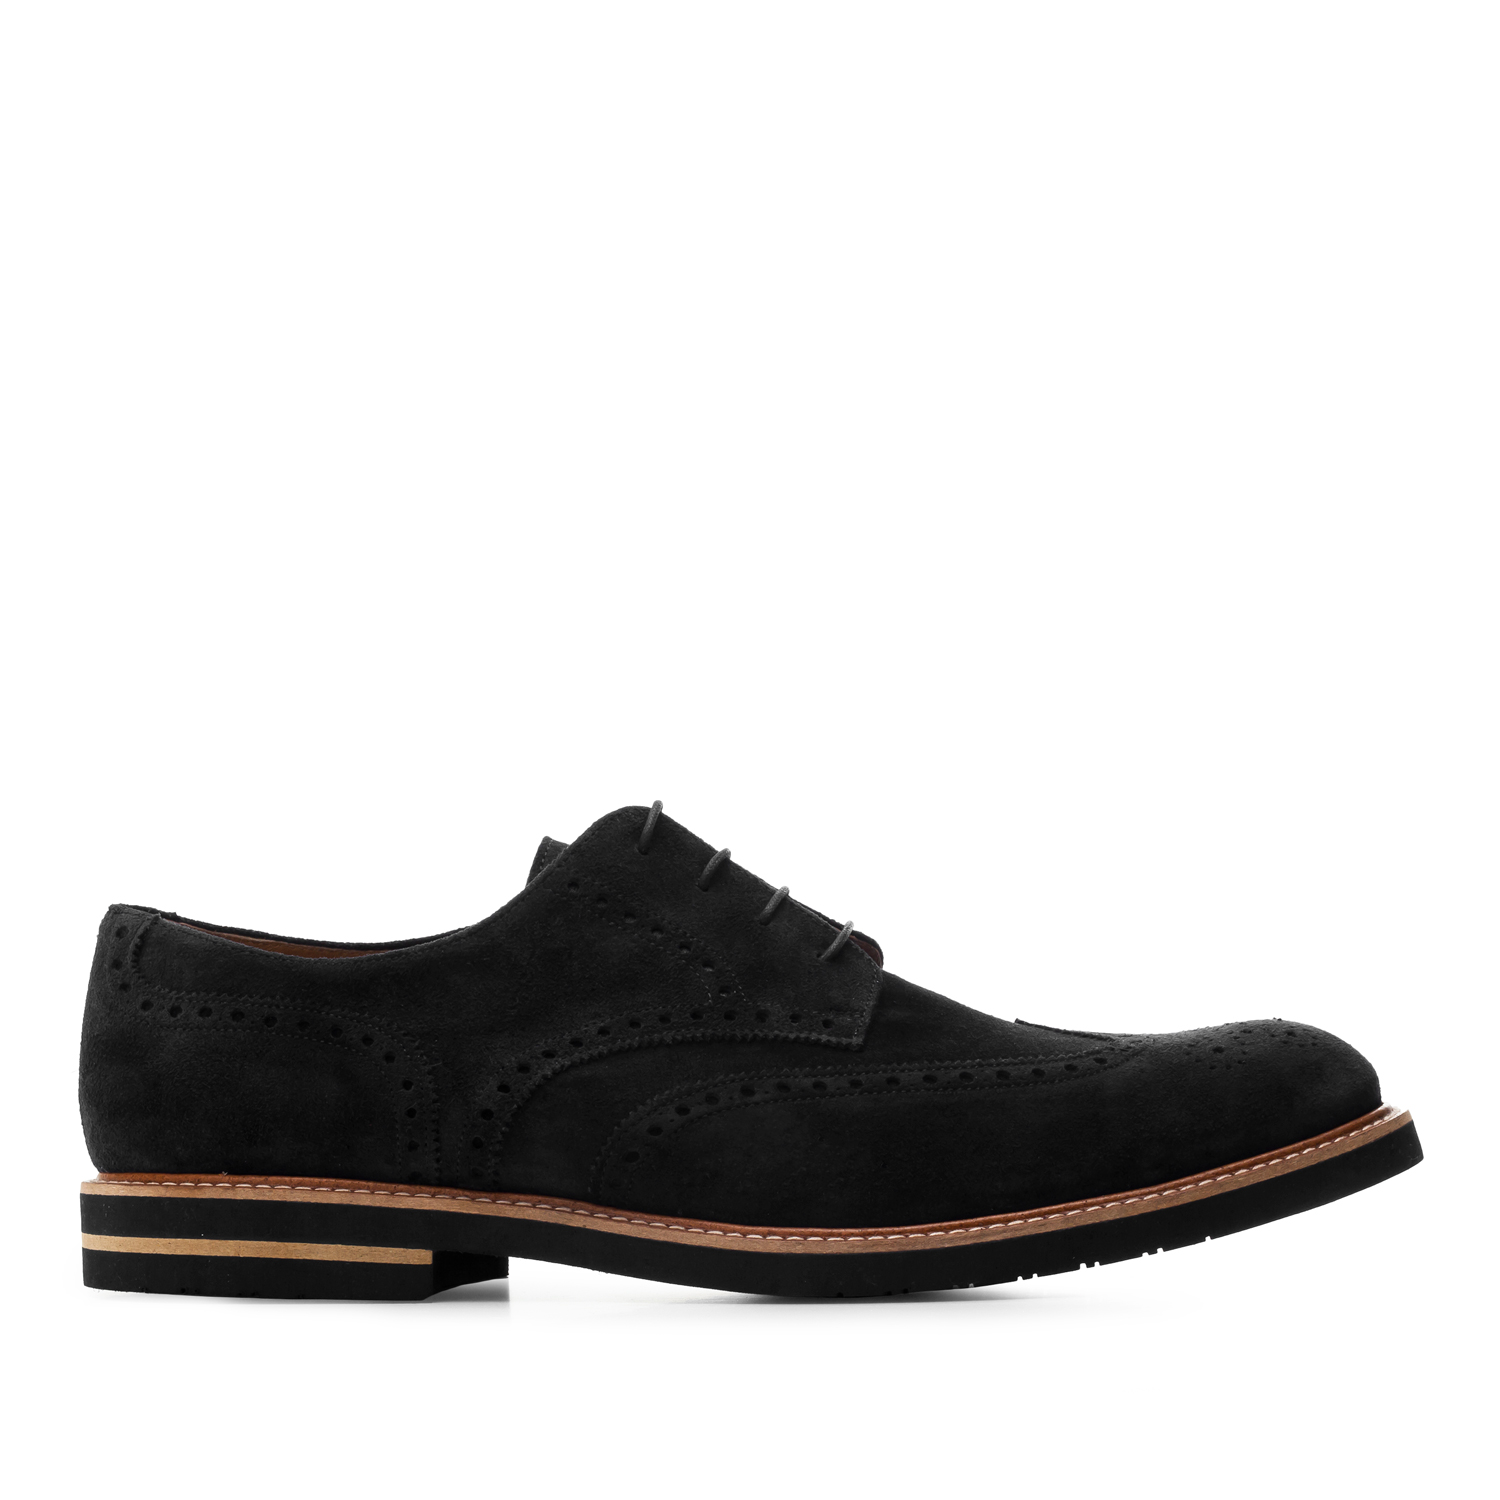 Oxford Shoes in Black genuine Split Leather 